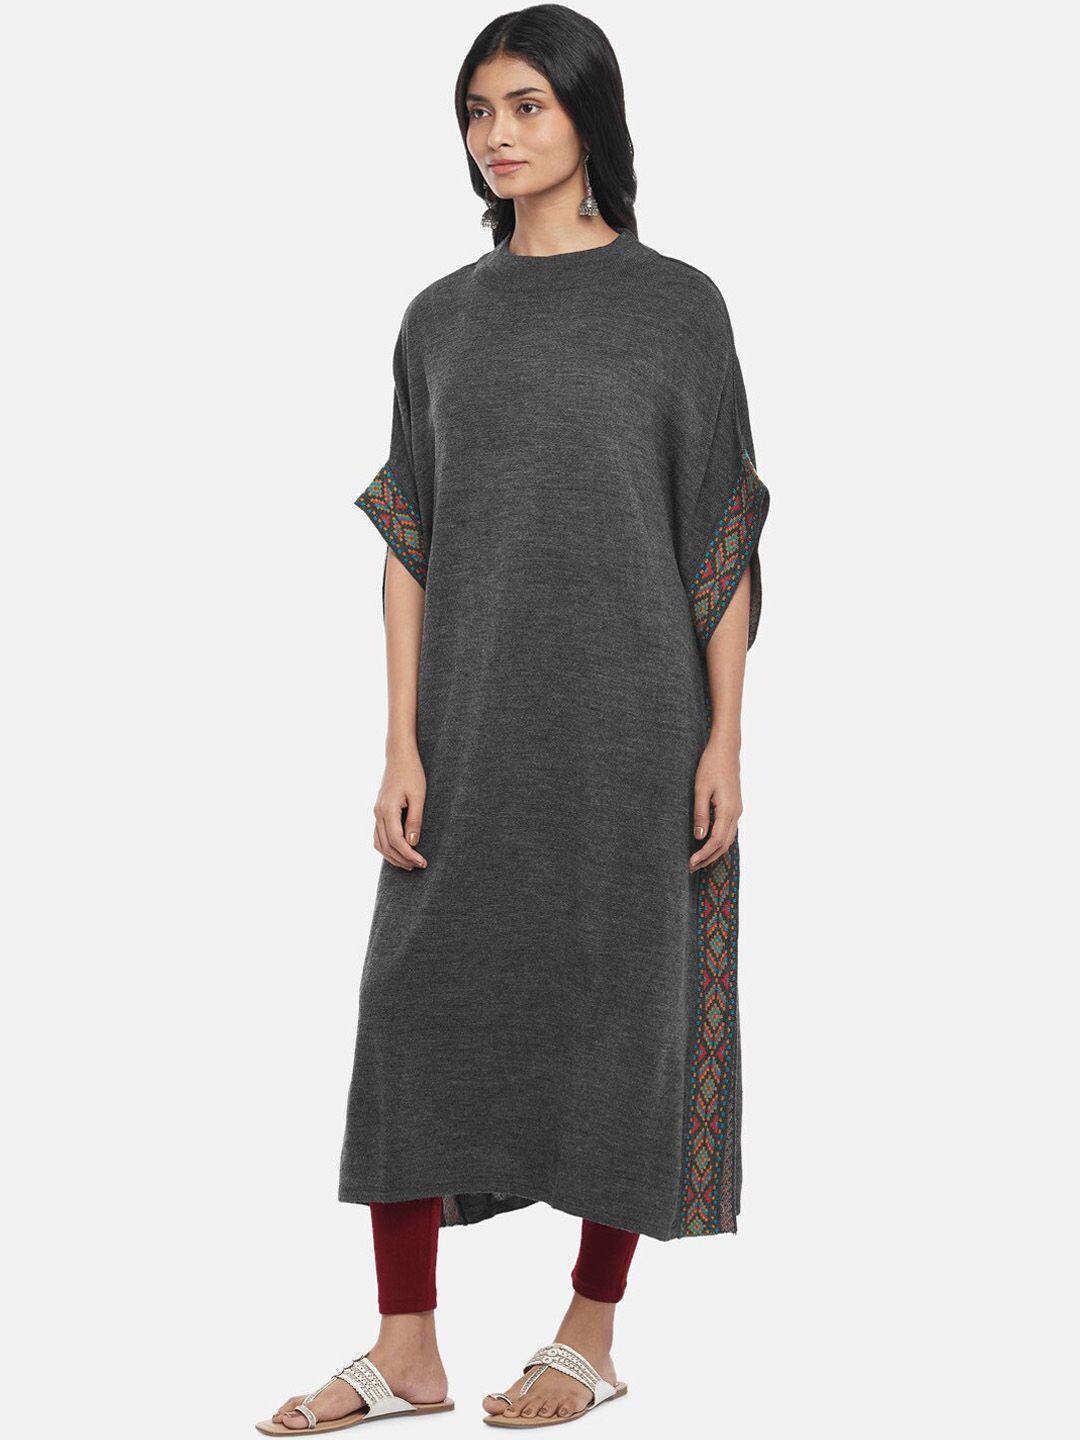 rangmanch by pantaloons women grey flared sleeves solid kaftan kurta